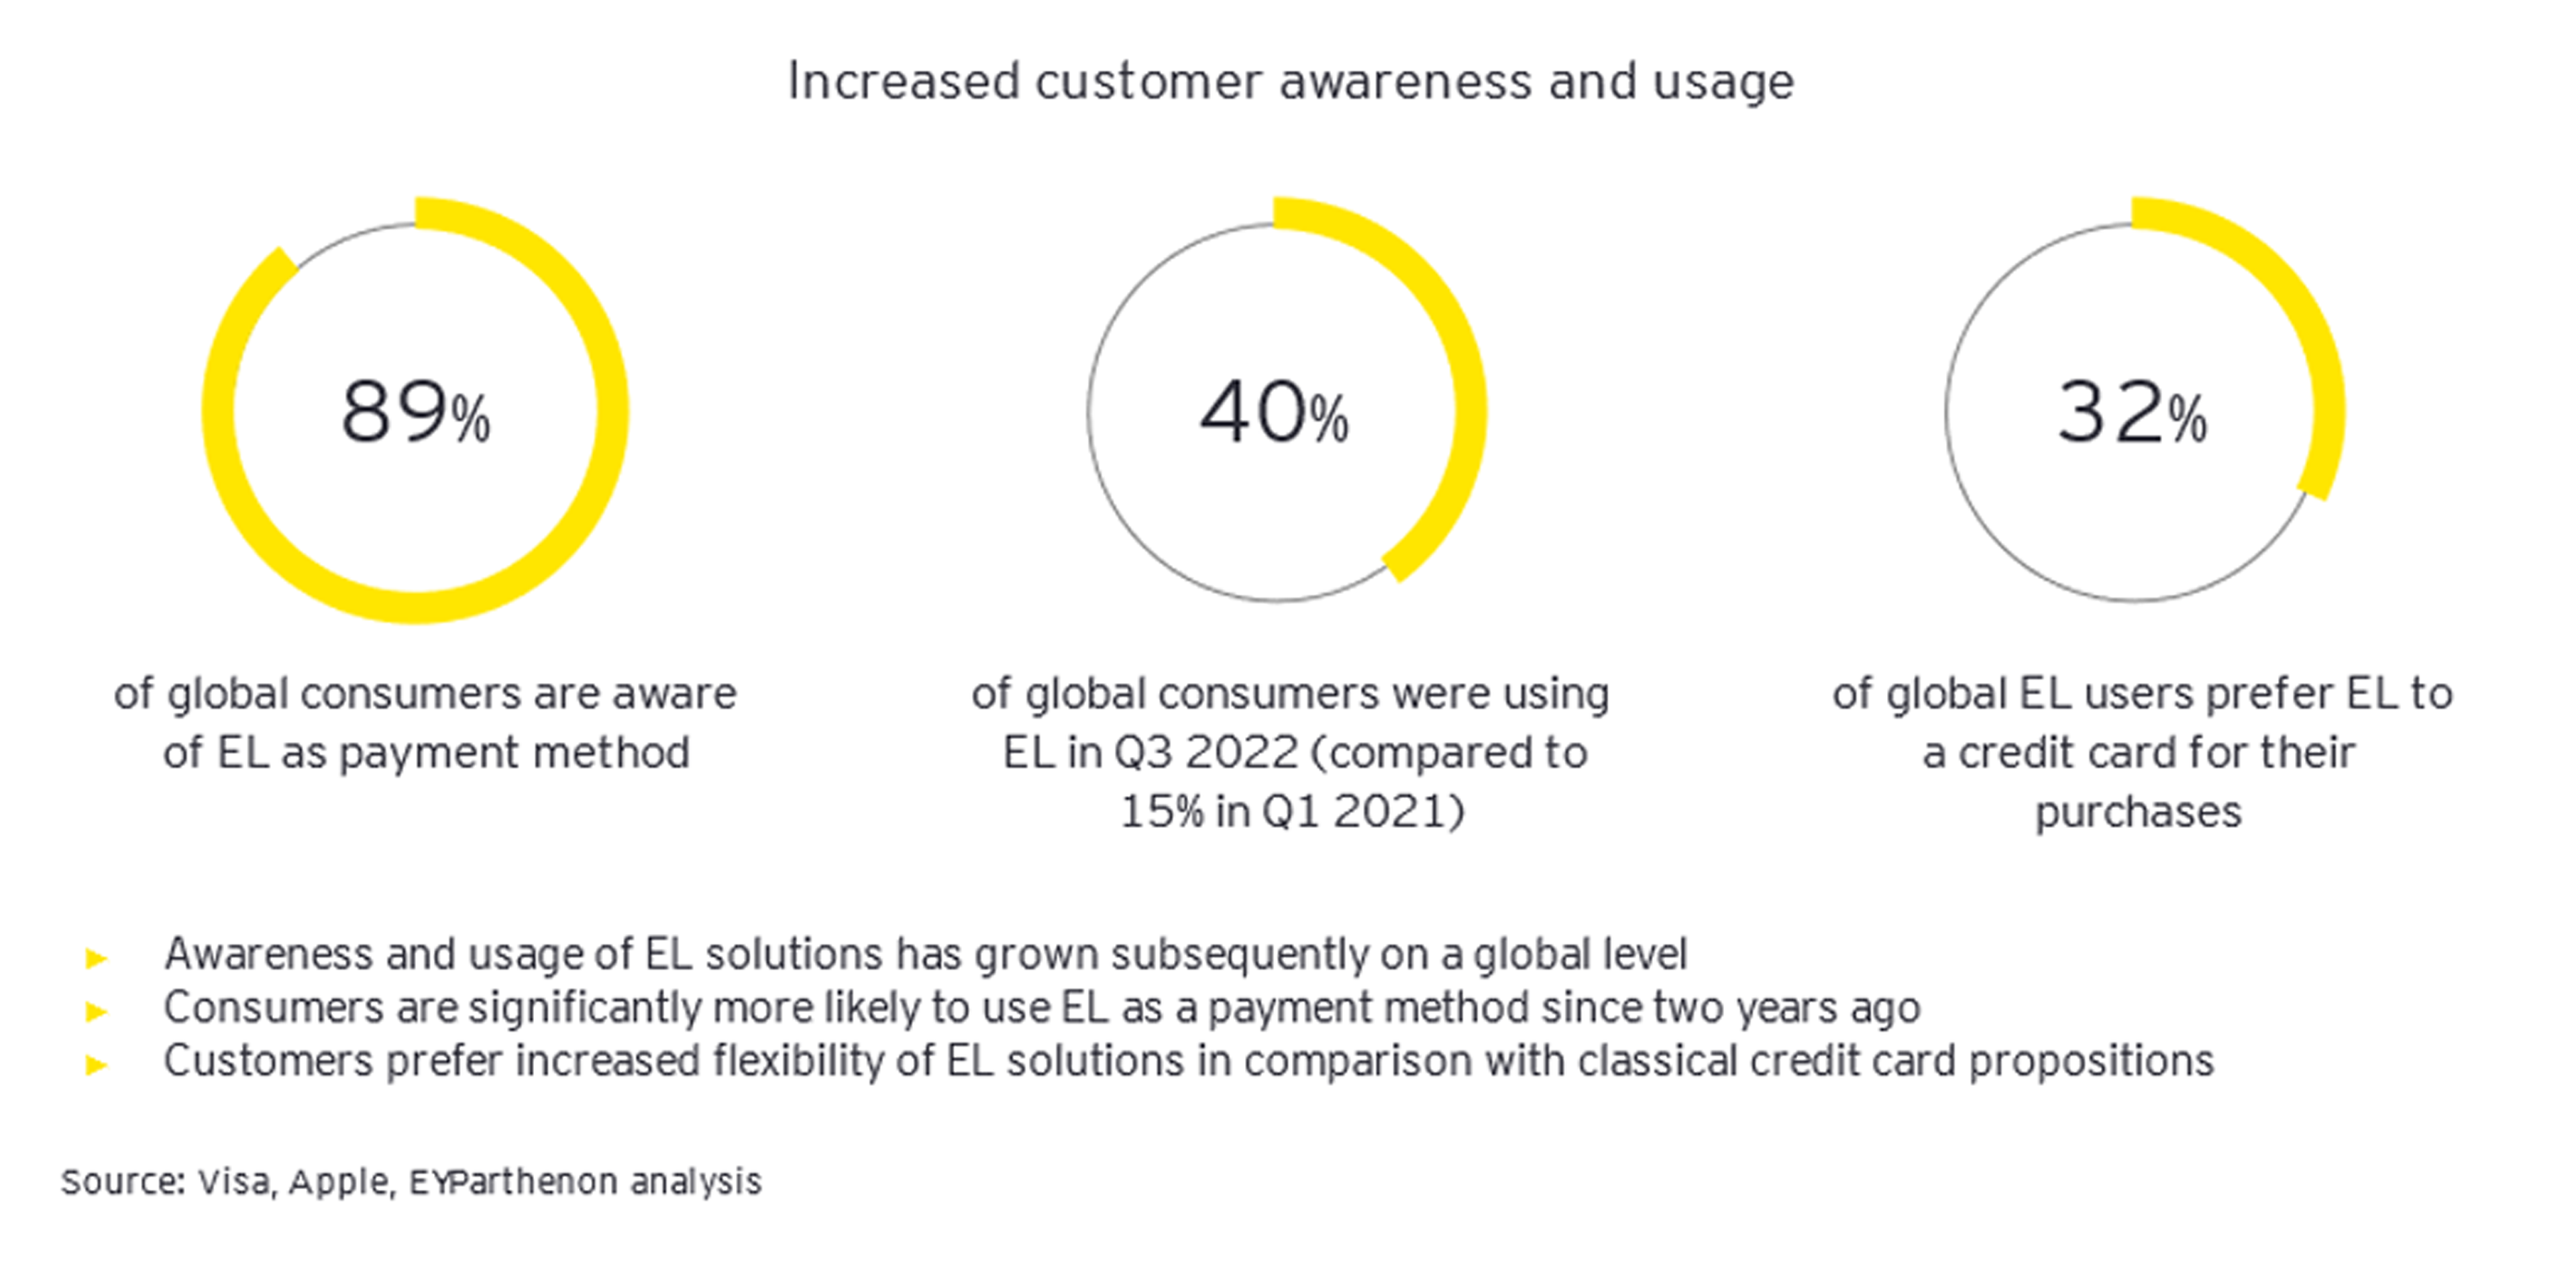 Increased customer awareness and usage